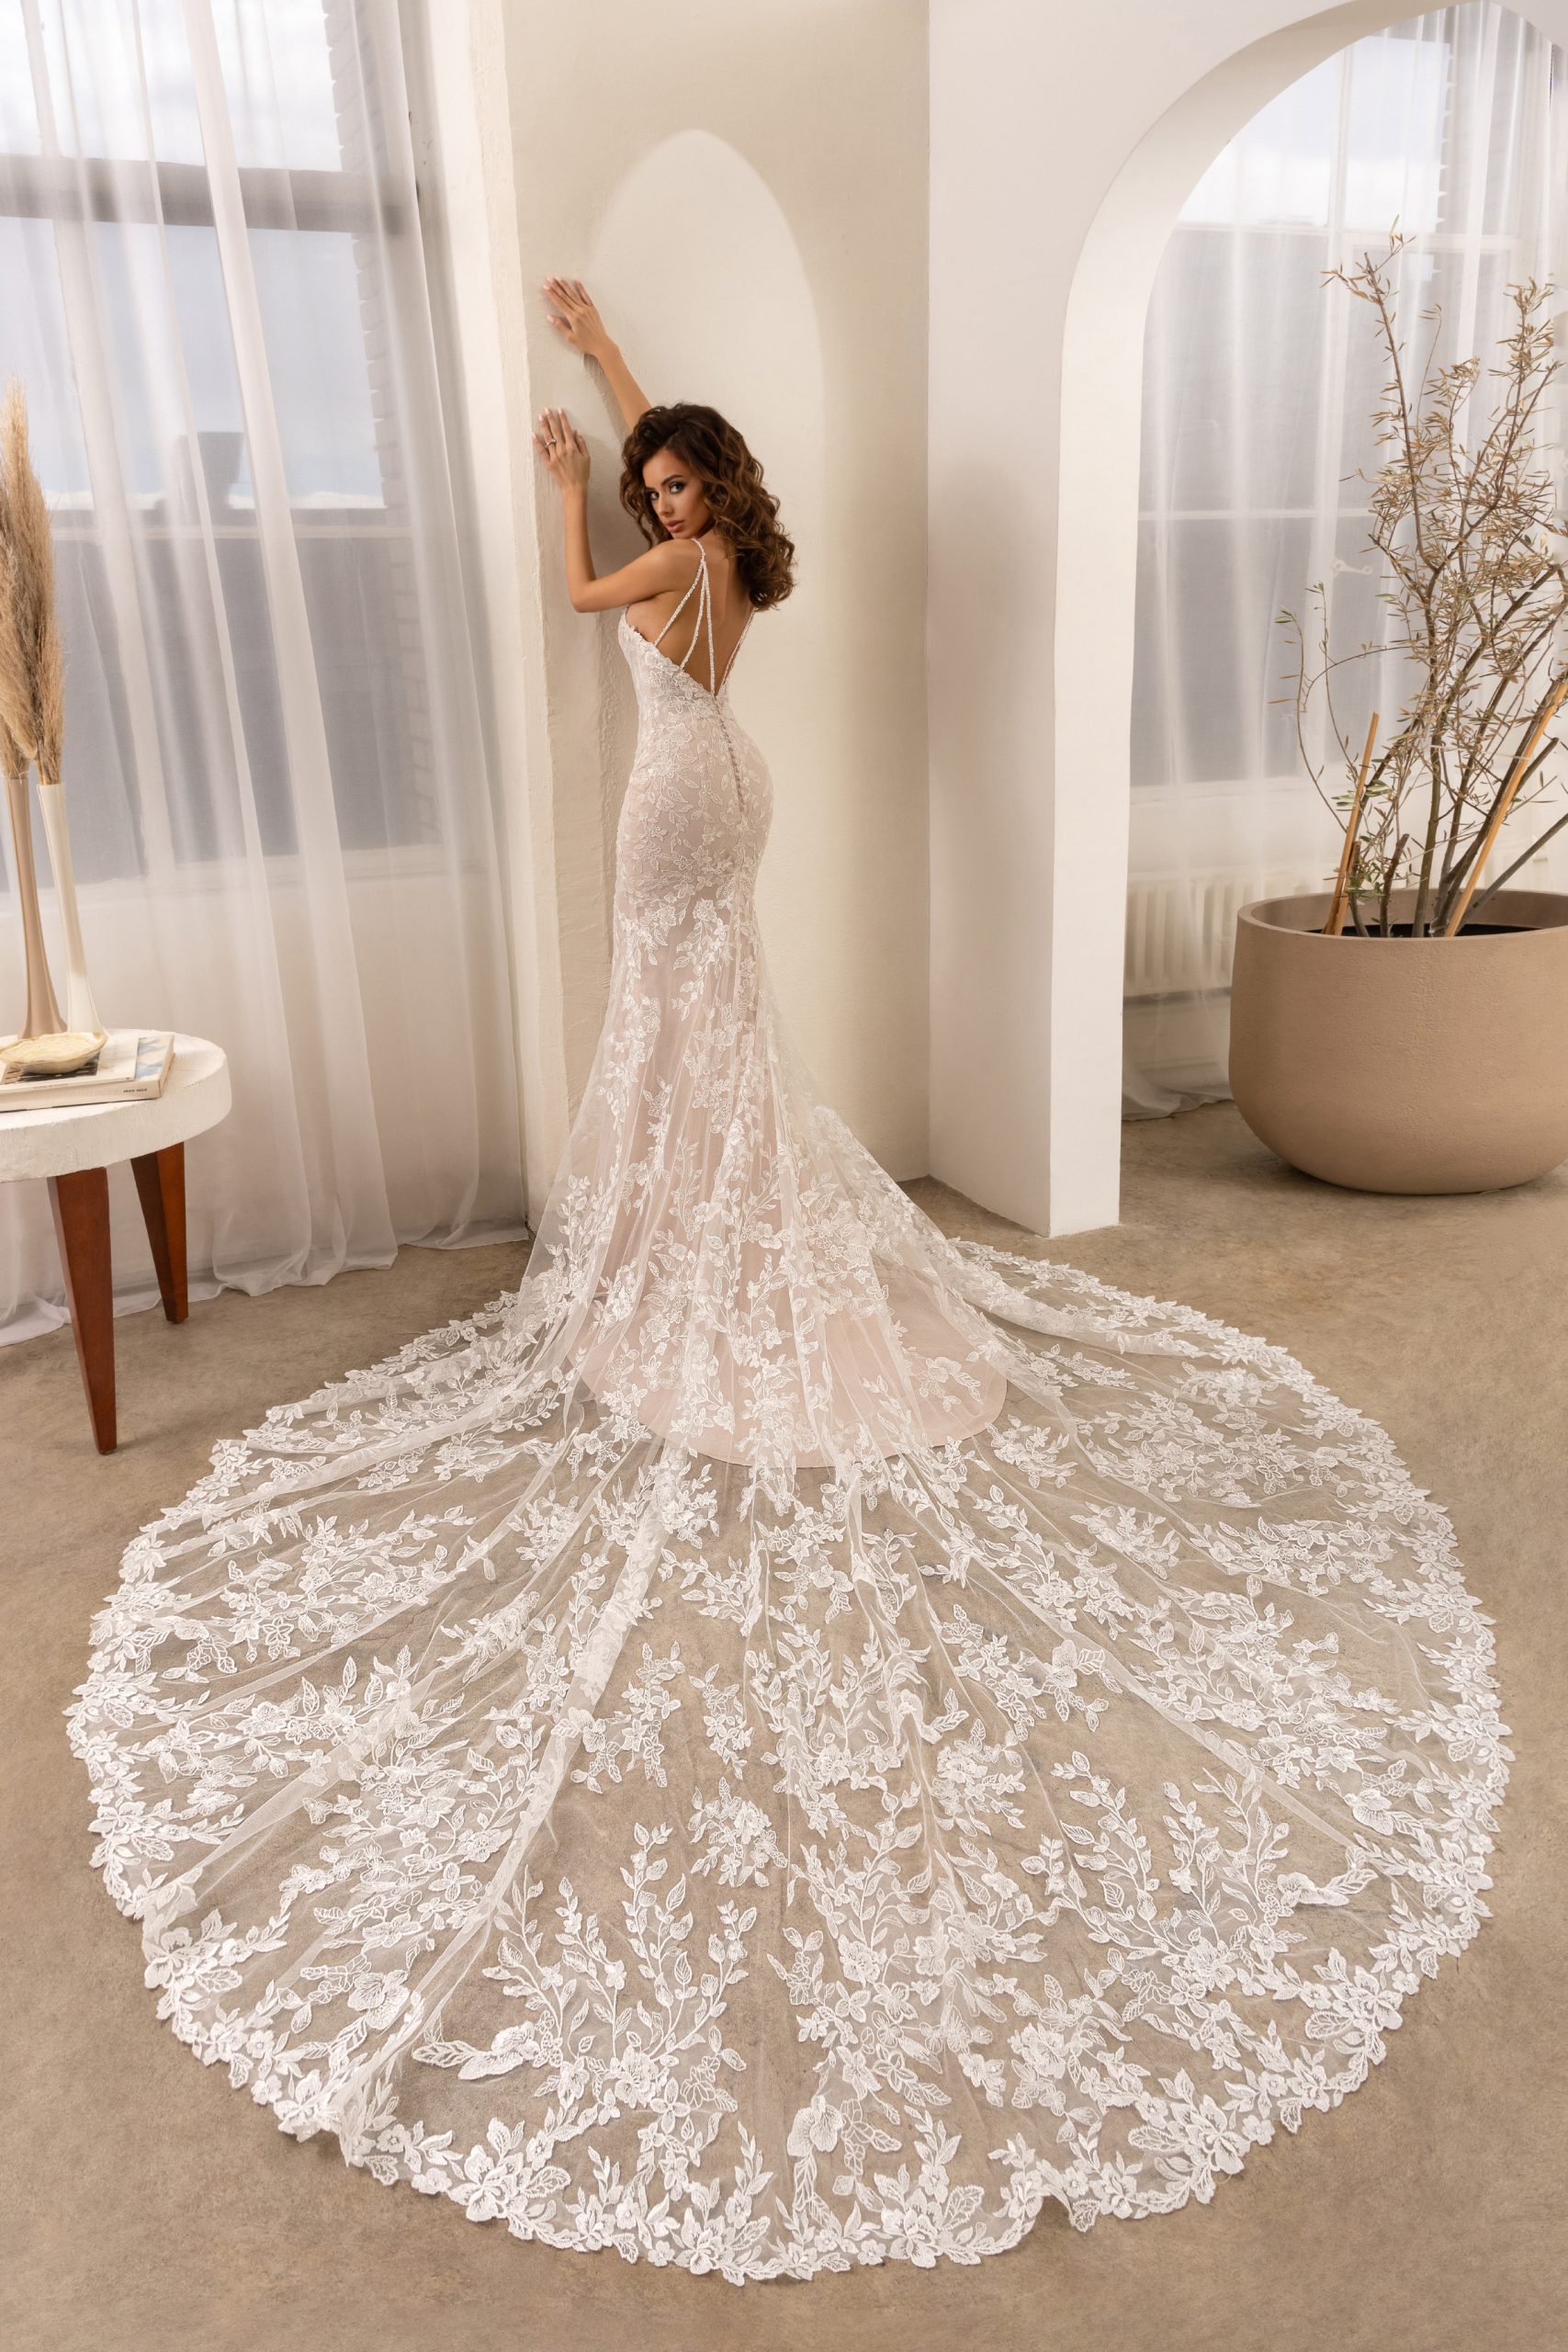 | – / FLEURETTE Bridal FLEURA COUTURE Dresses KITTYCHEN Wedding | Gowns